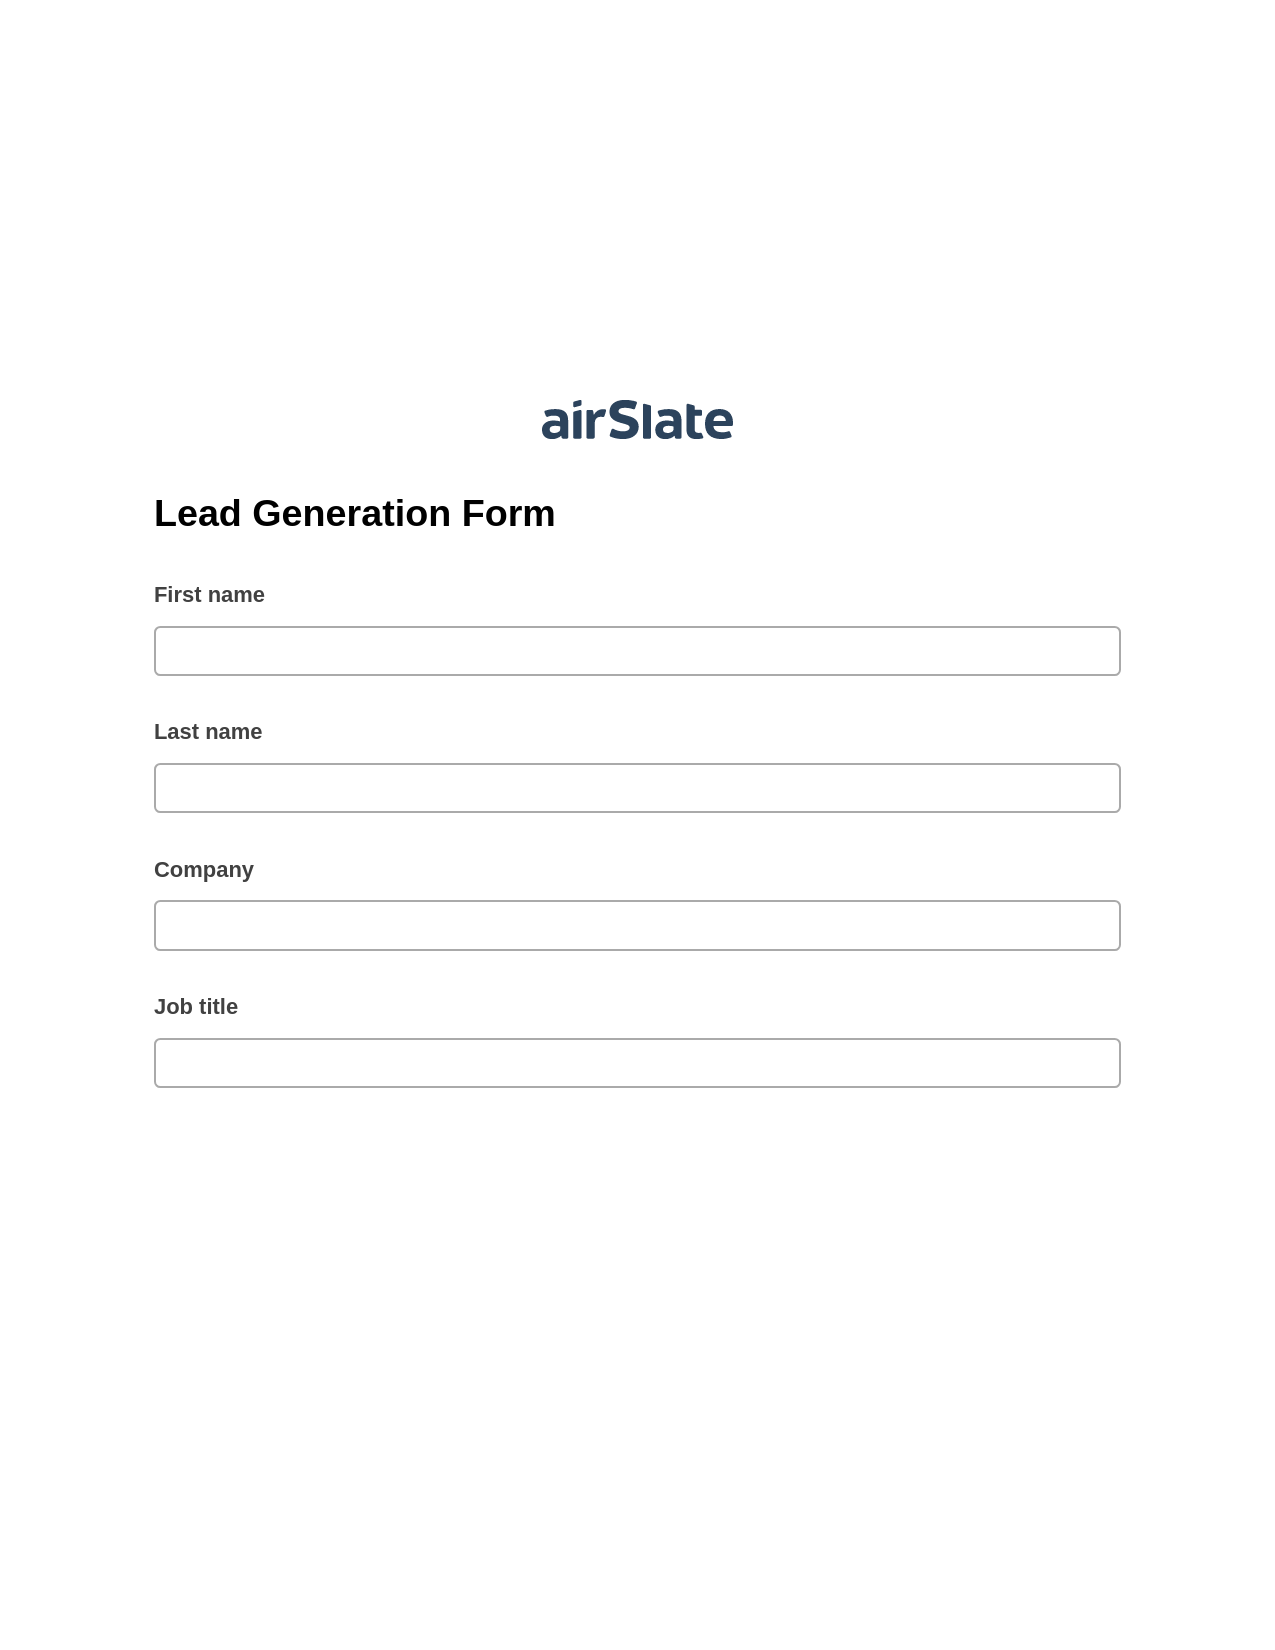 Lead Generation Form Pre-fill Document Bot, Create Slate Reminder Bot, Slack Notification Postfinish Bot